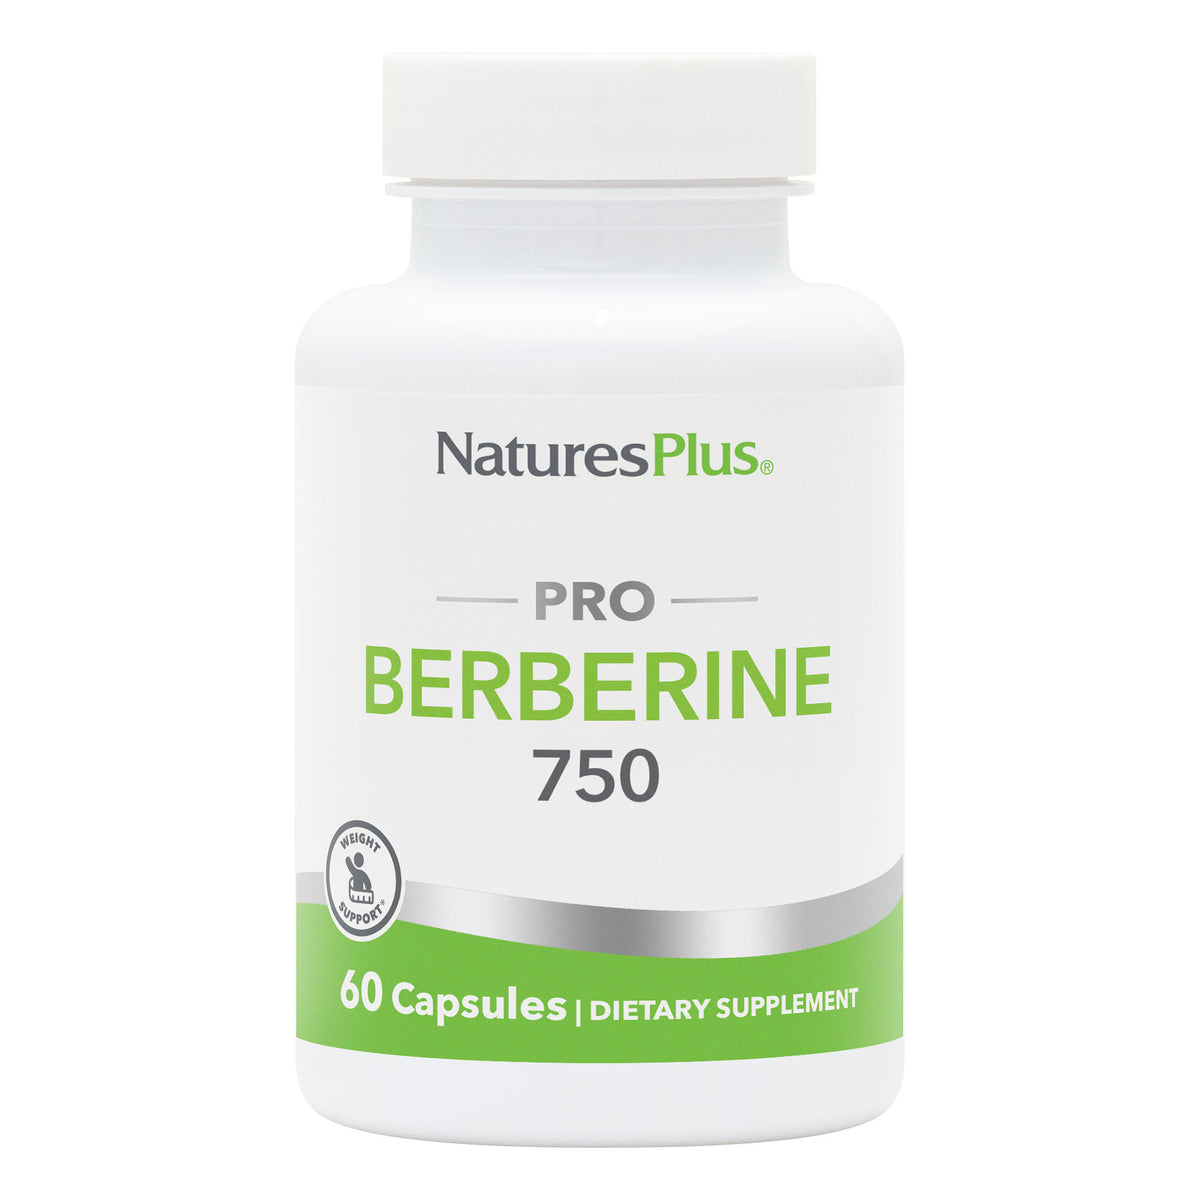 product image of NaturesPlus PRO Berberine 750 MG Capsules containing 60 Count